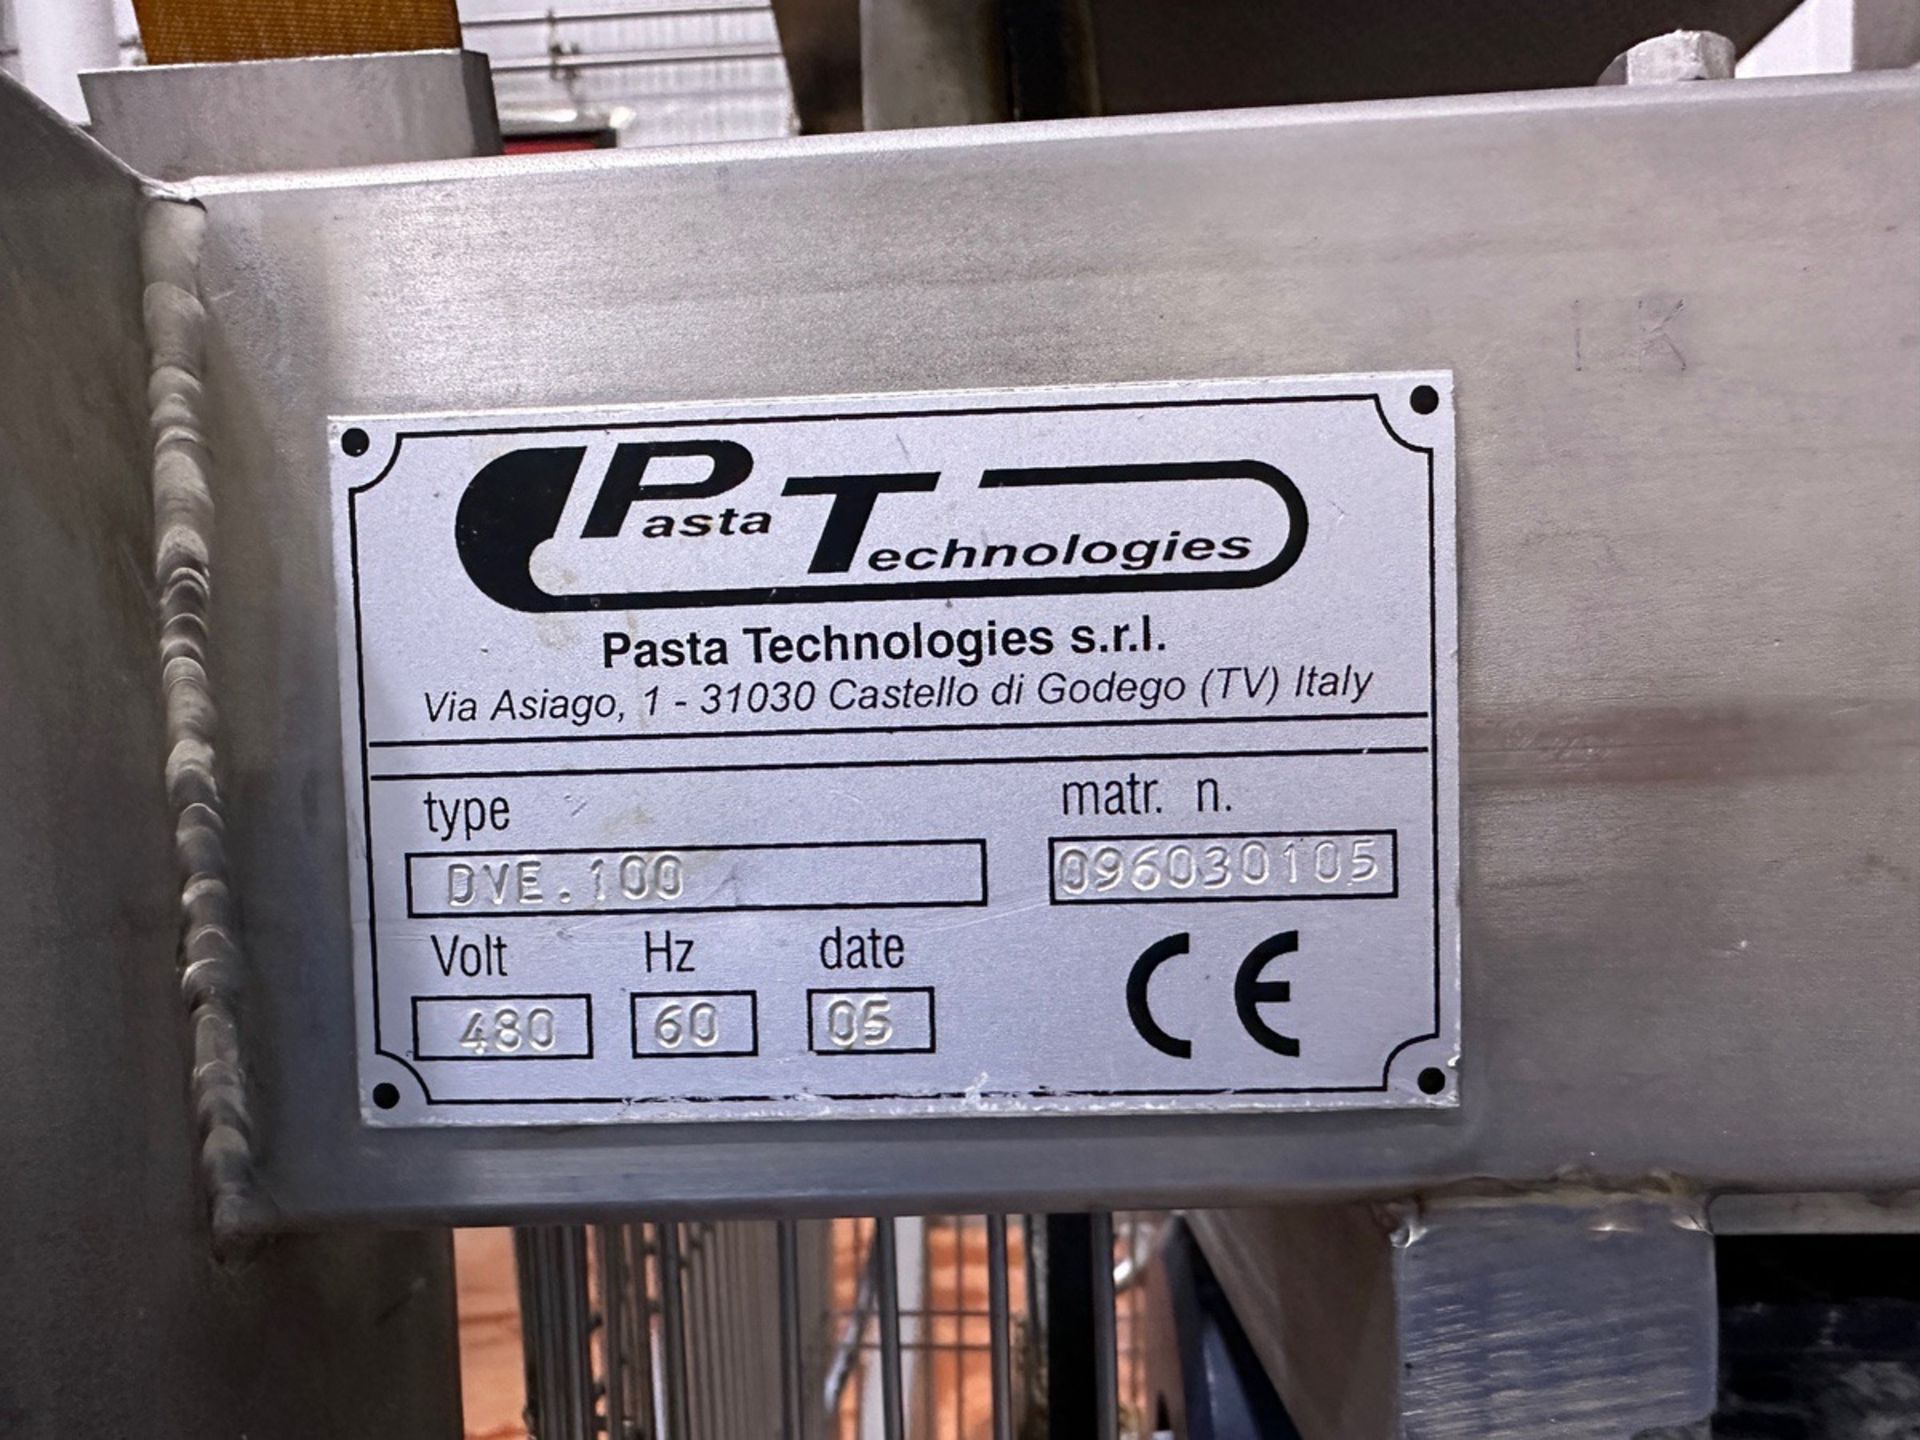 Pasta Technologies DVE 100 Vibratory Conveyor, S/N 096030105 - Subj to Bulk | Rig Fee $200 - Image 4 of 4